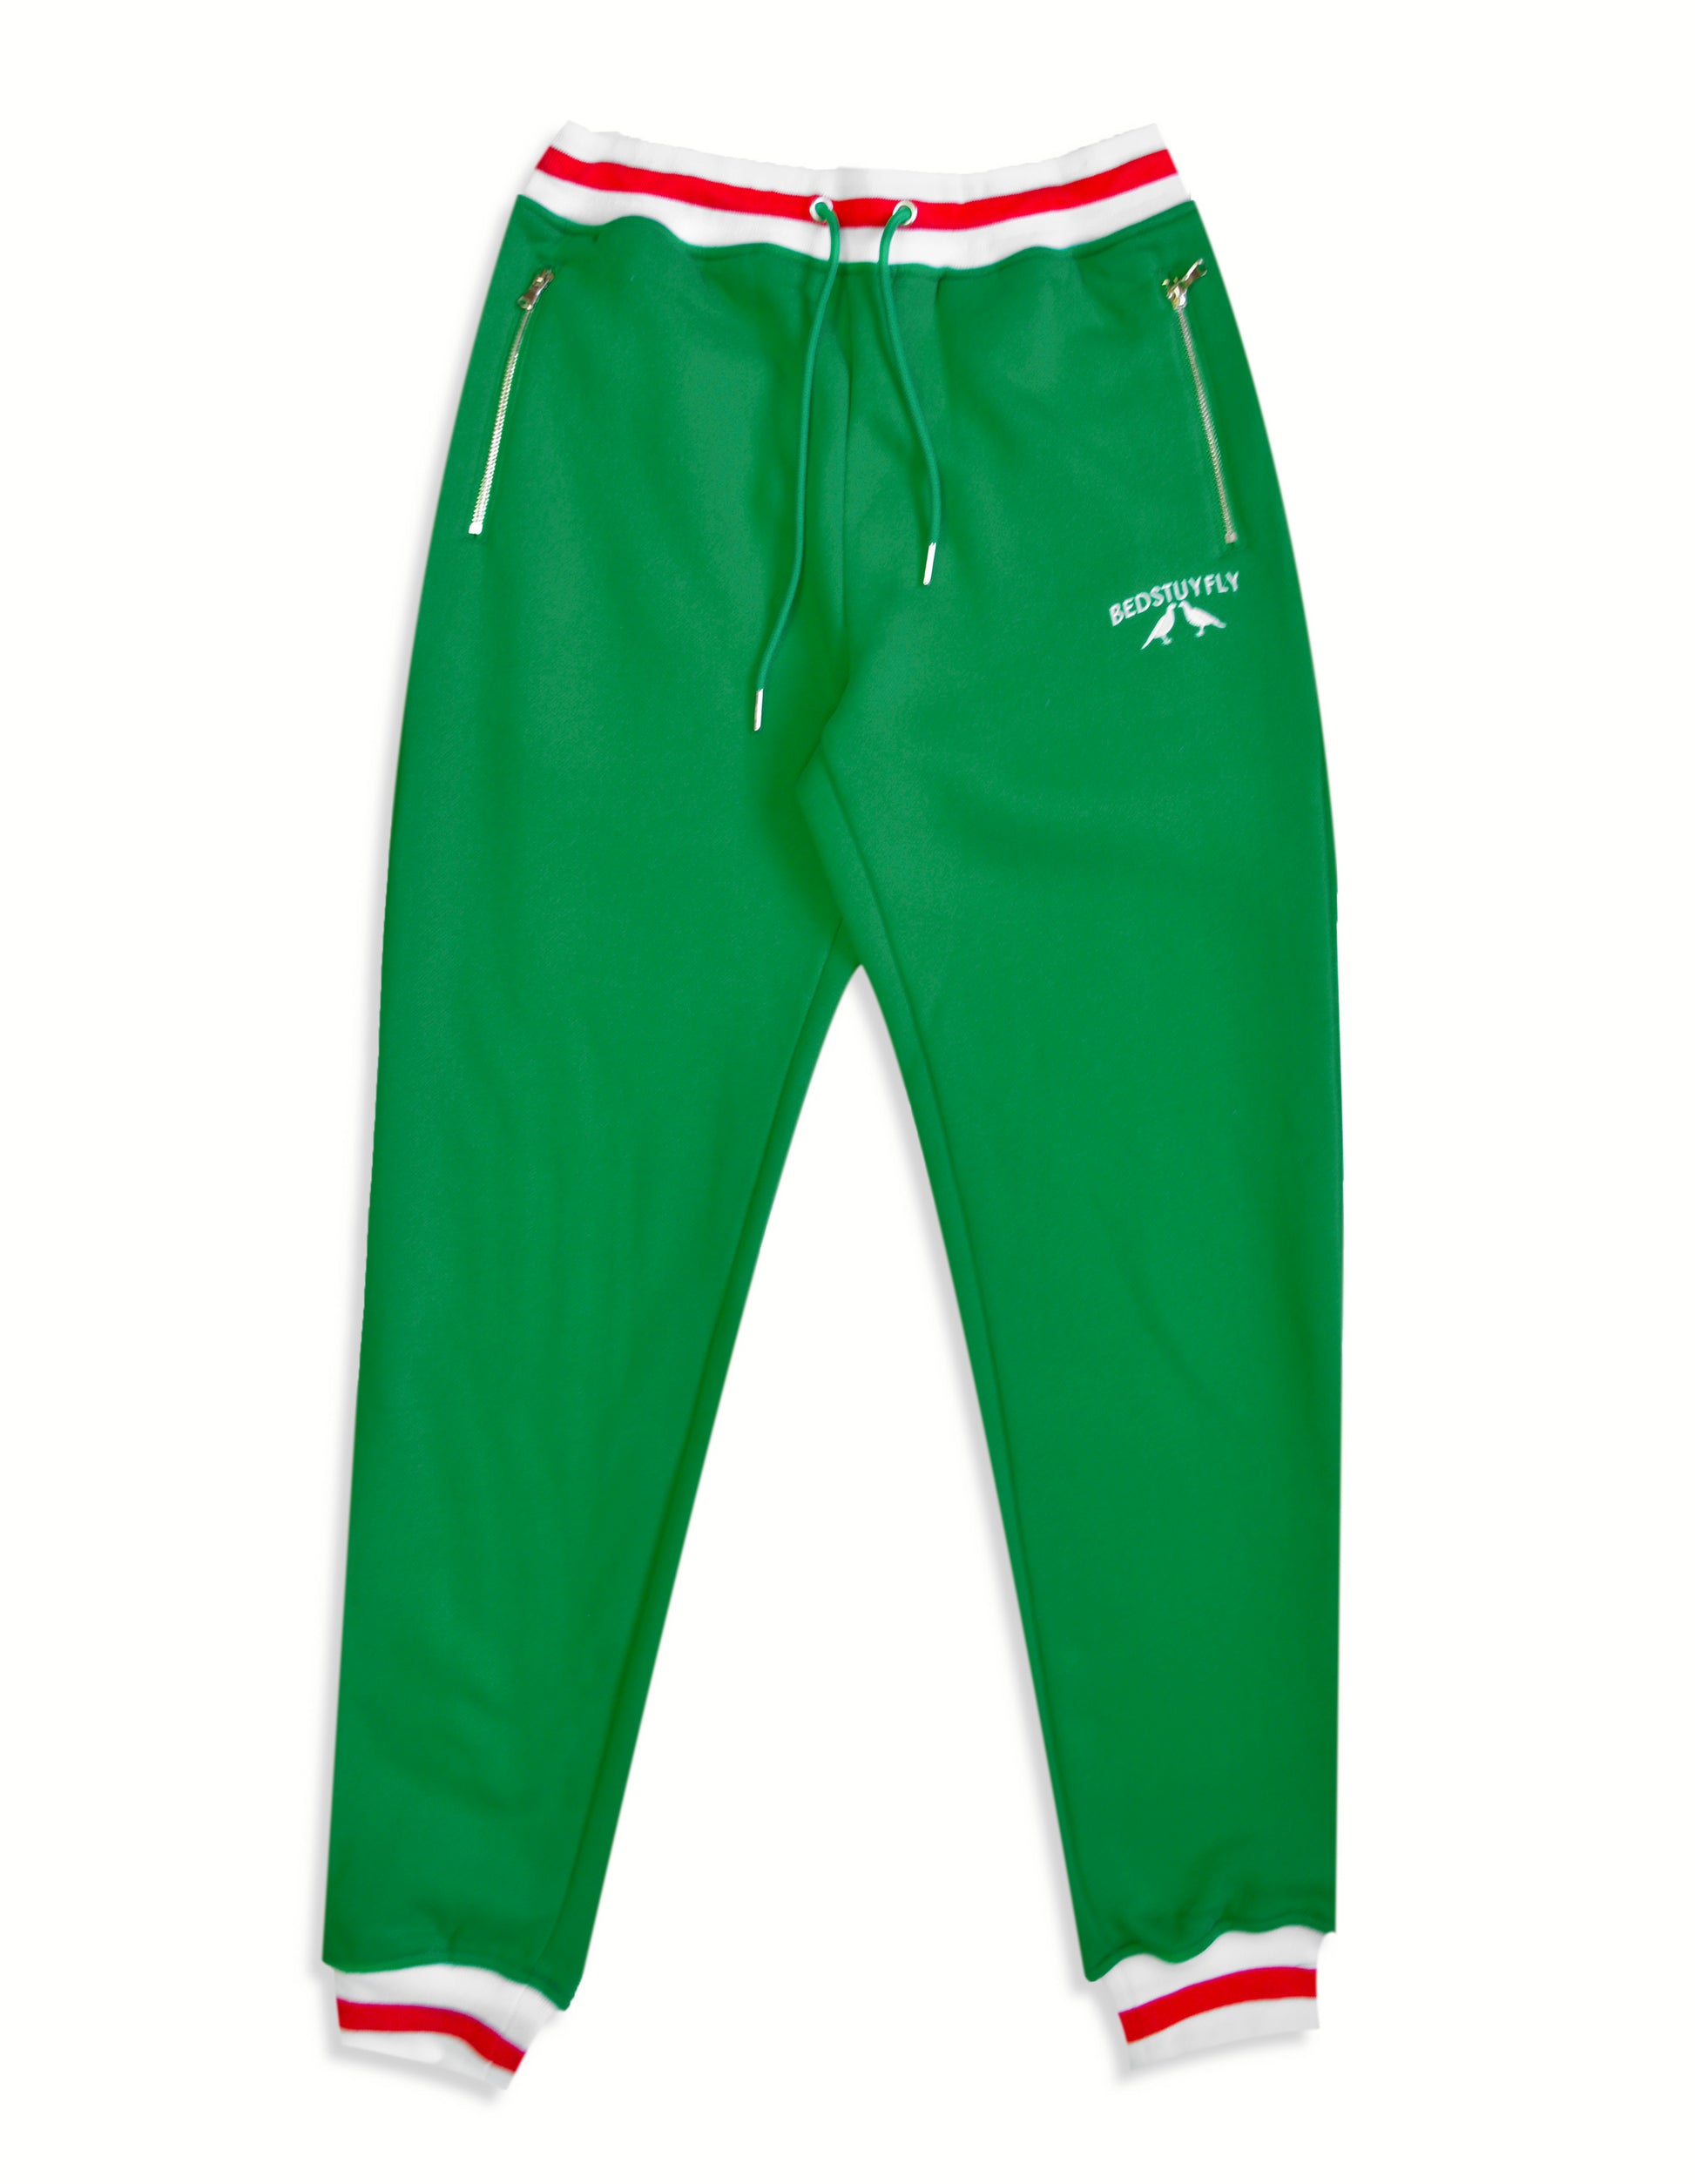 Vanderbilt Sweatpants (Green) - Bedstuyfly